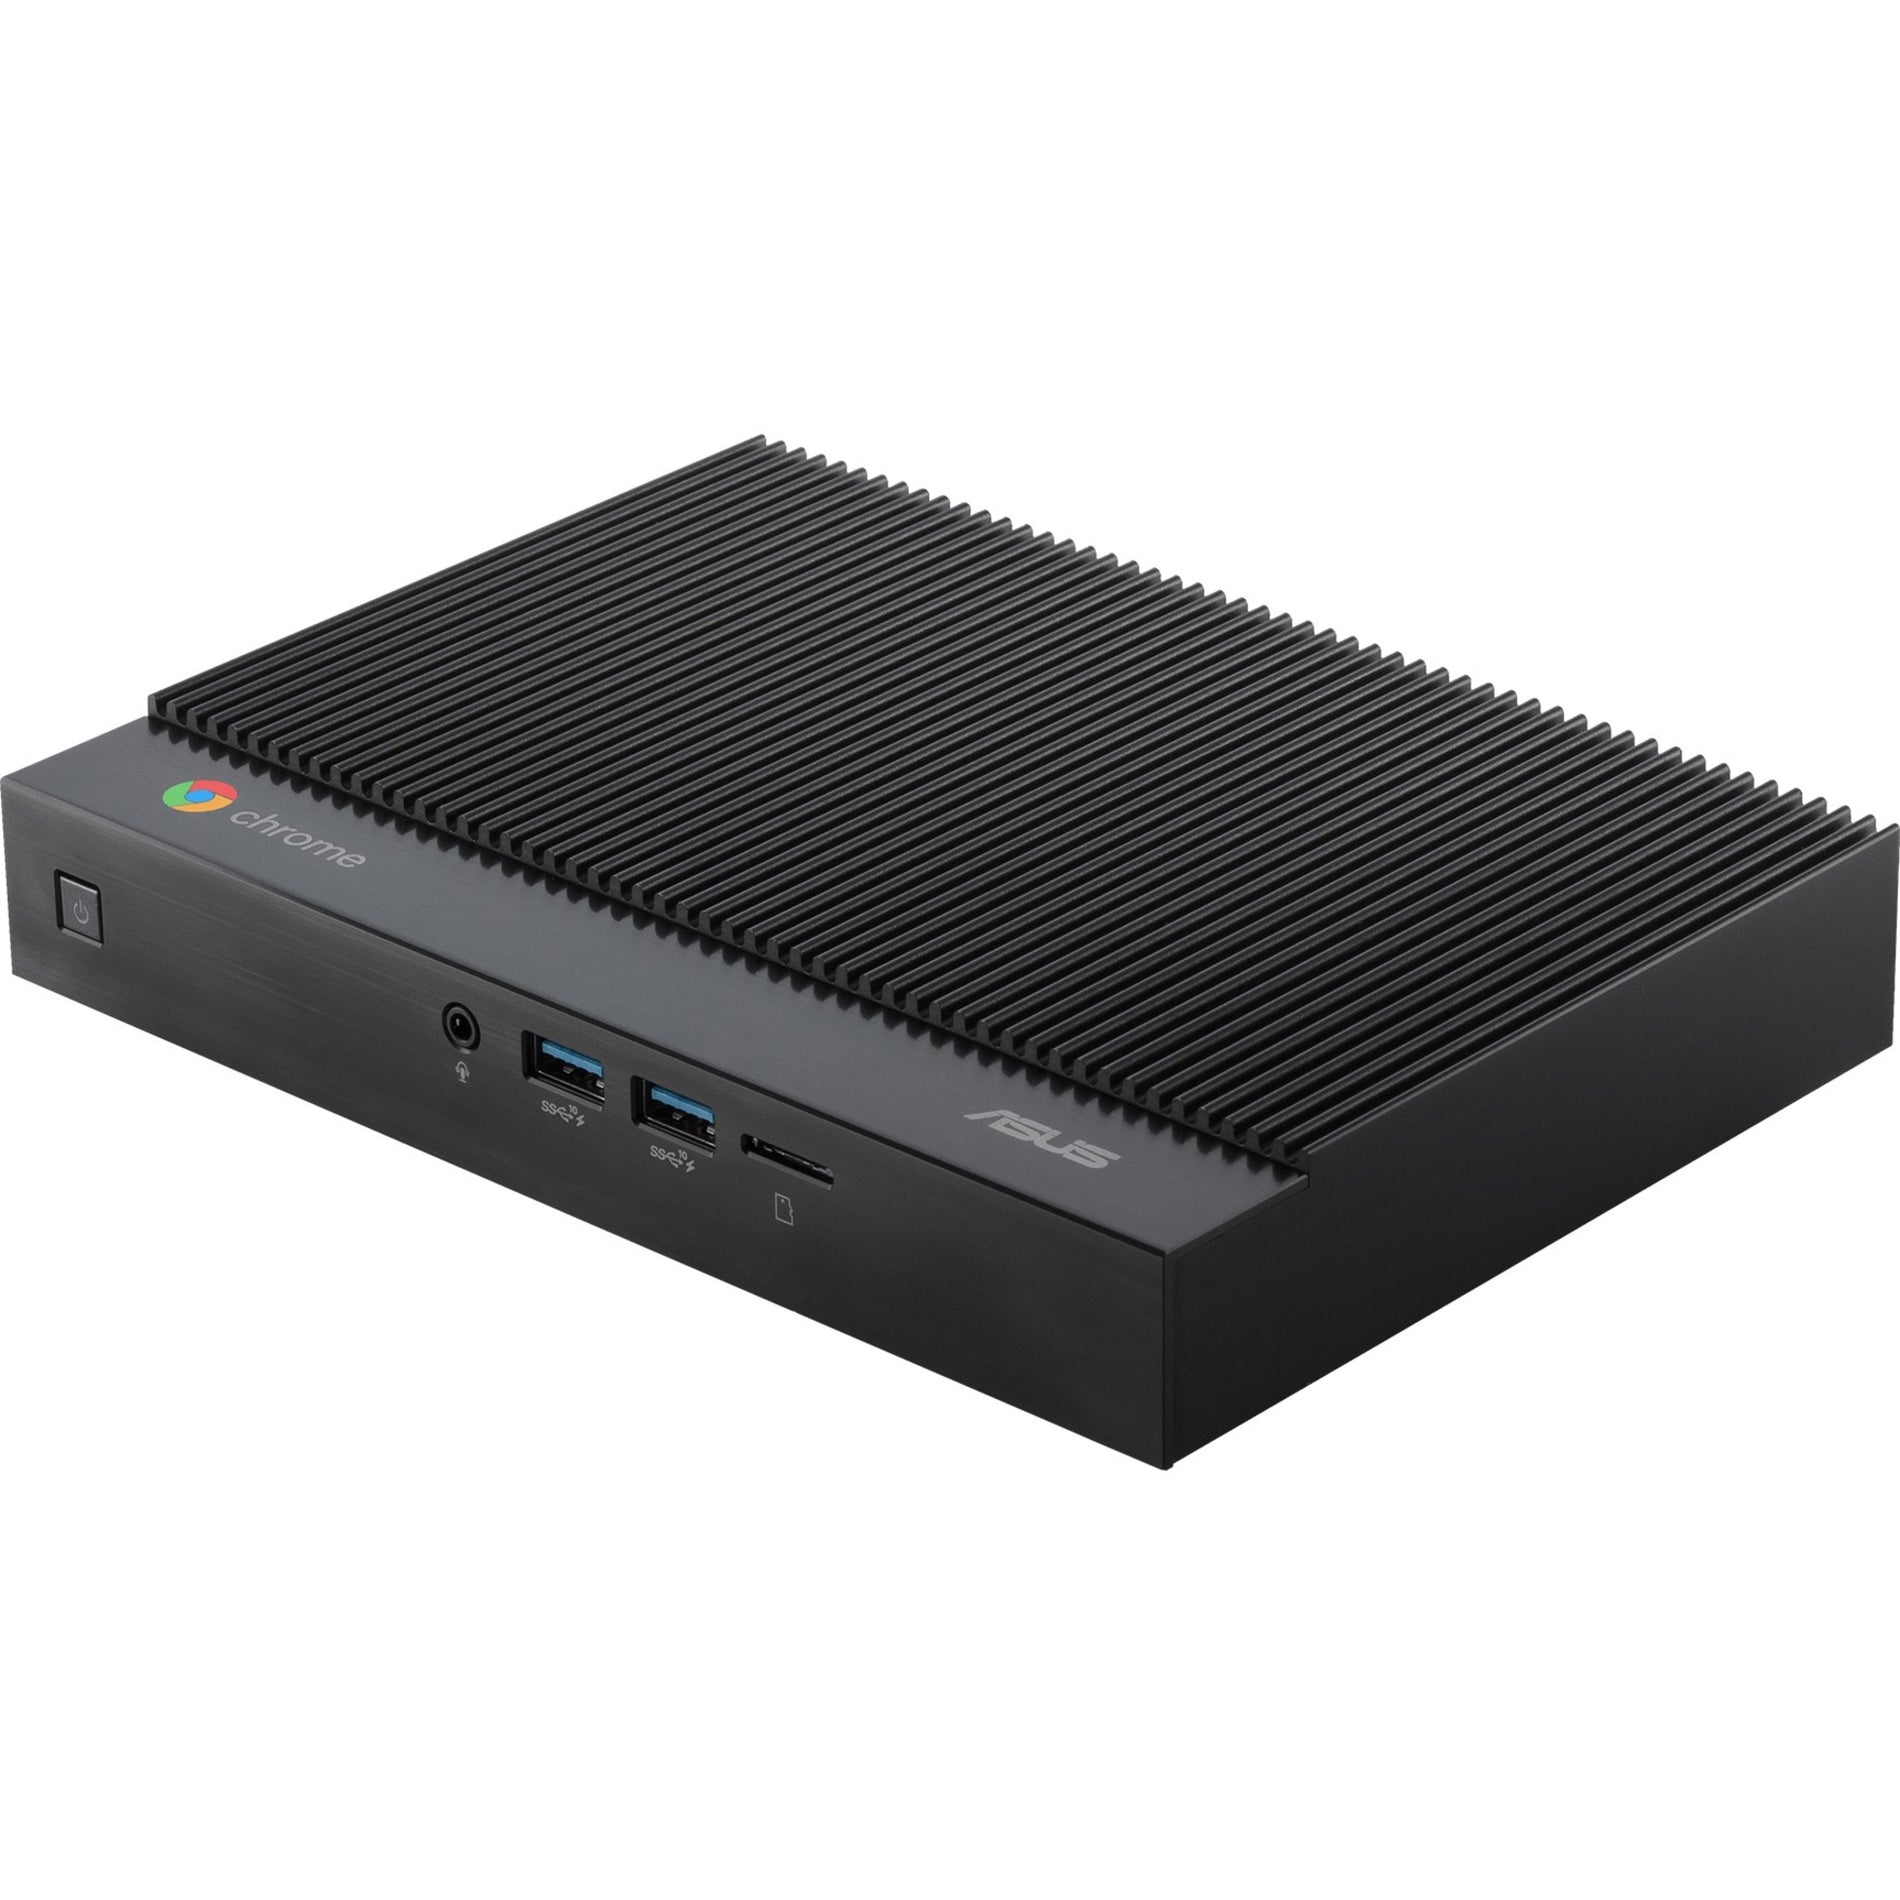 Asus CHROMEBOX4-FC017U Chromebox, Intel Celeron 5205U 1.90 GHz, 4GB RAM, 32GB Flash Memory, Gun Metal